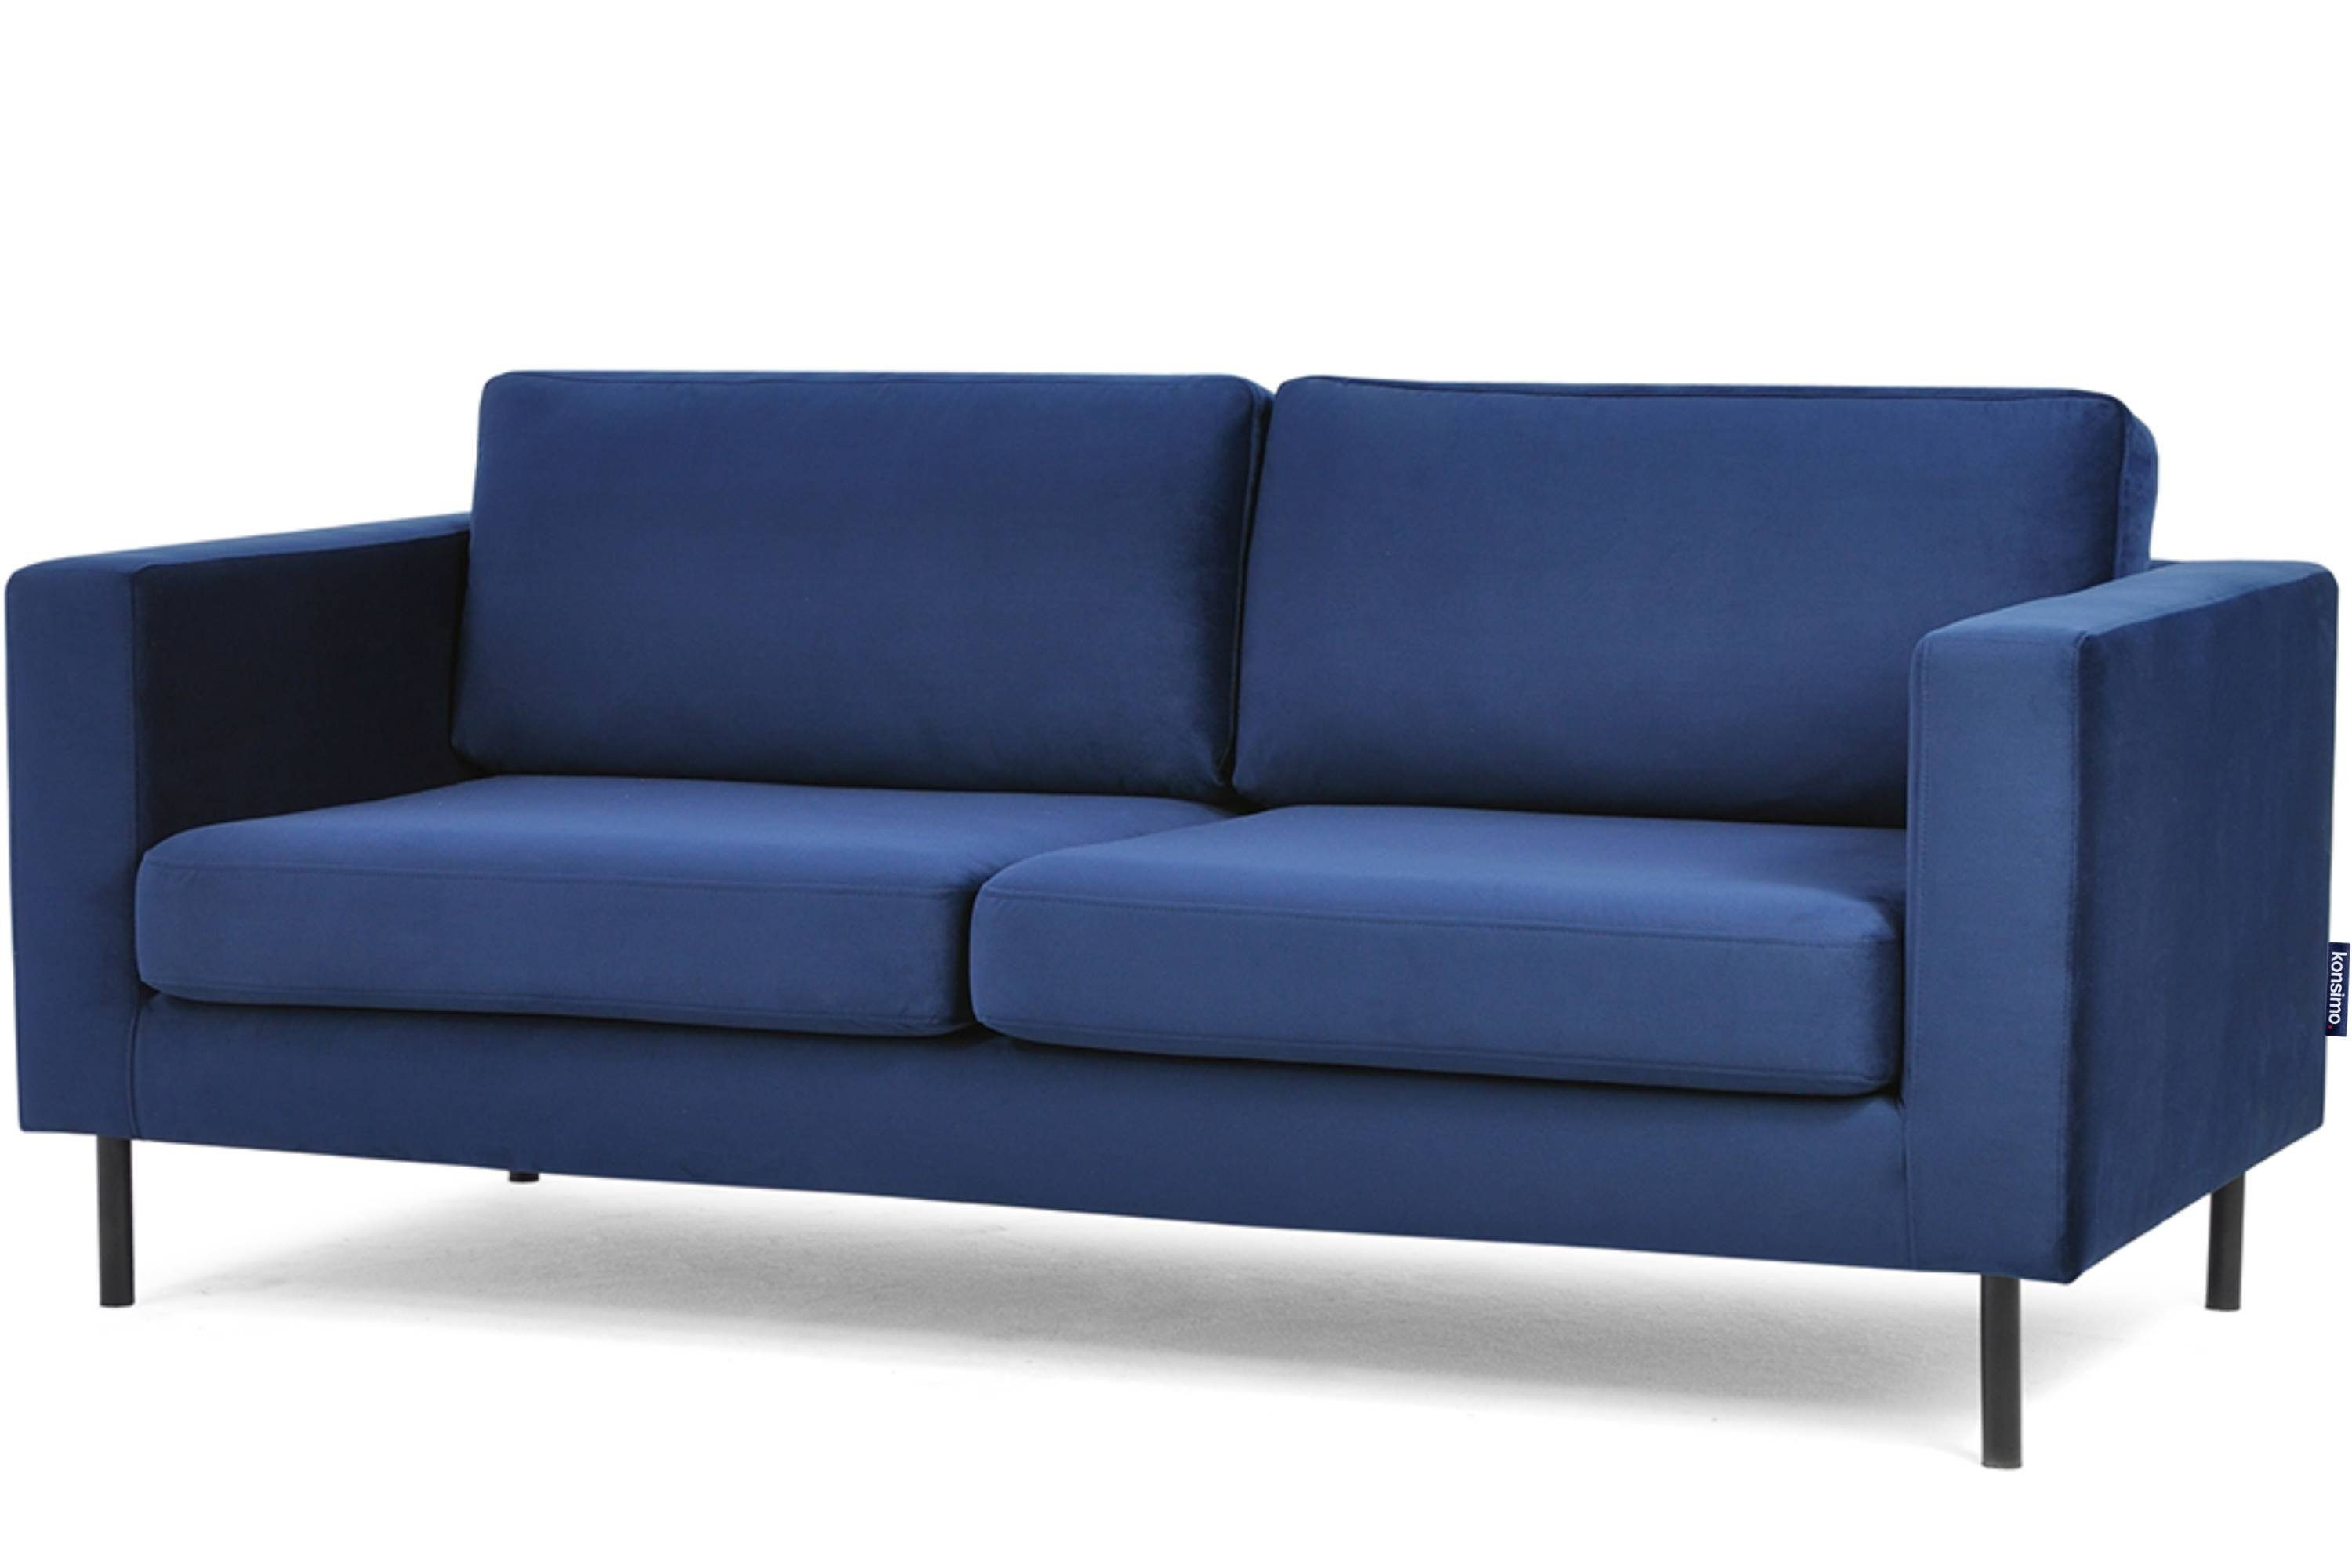 marineblau | TOZZI Beine, marineblau universelles hohe marineblau Konsimo Sofa, Design 2,5-Sitzer |